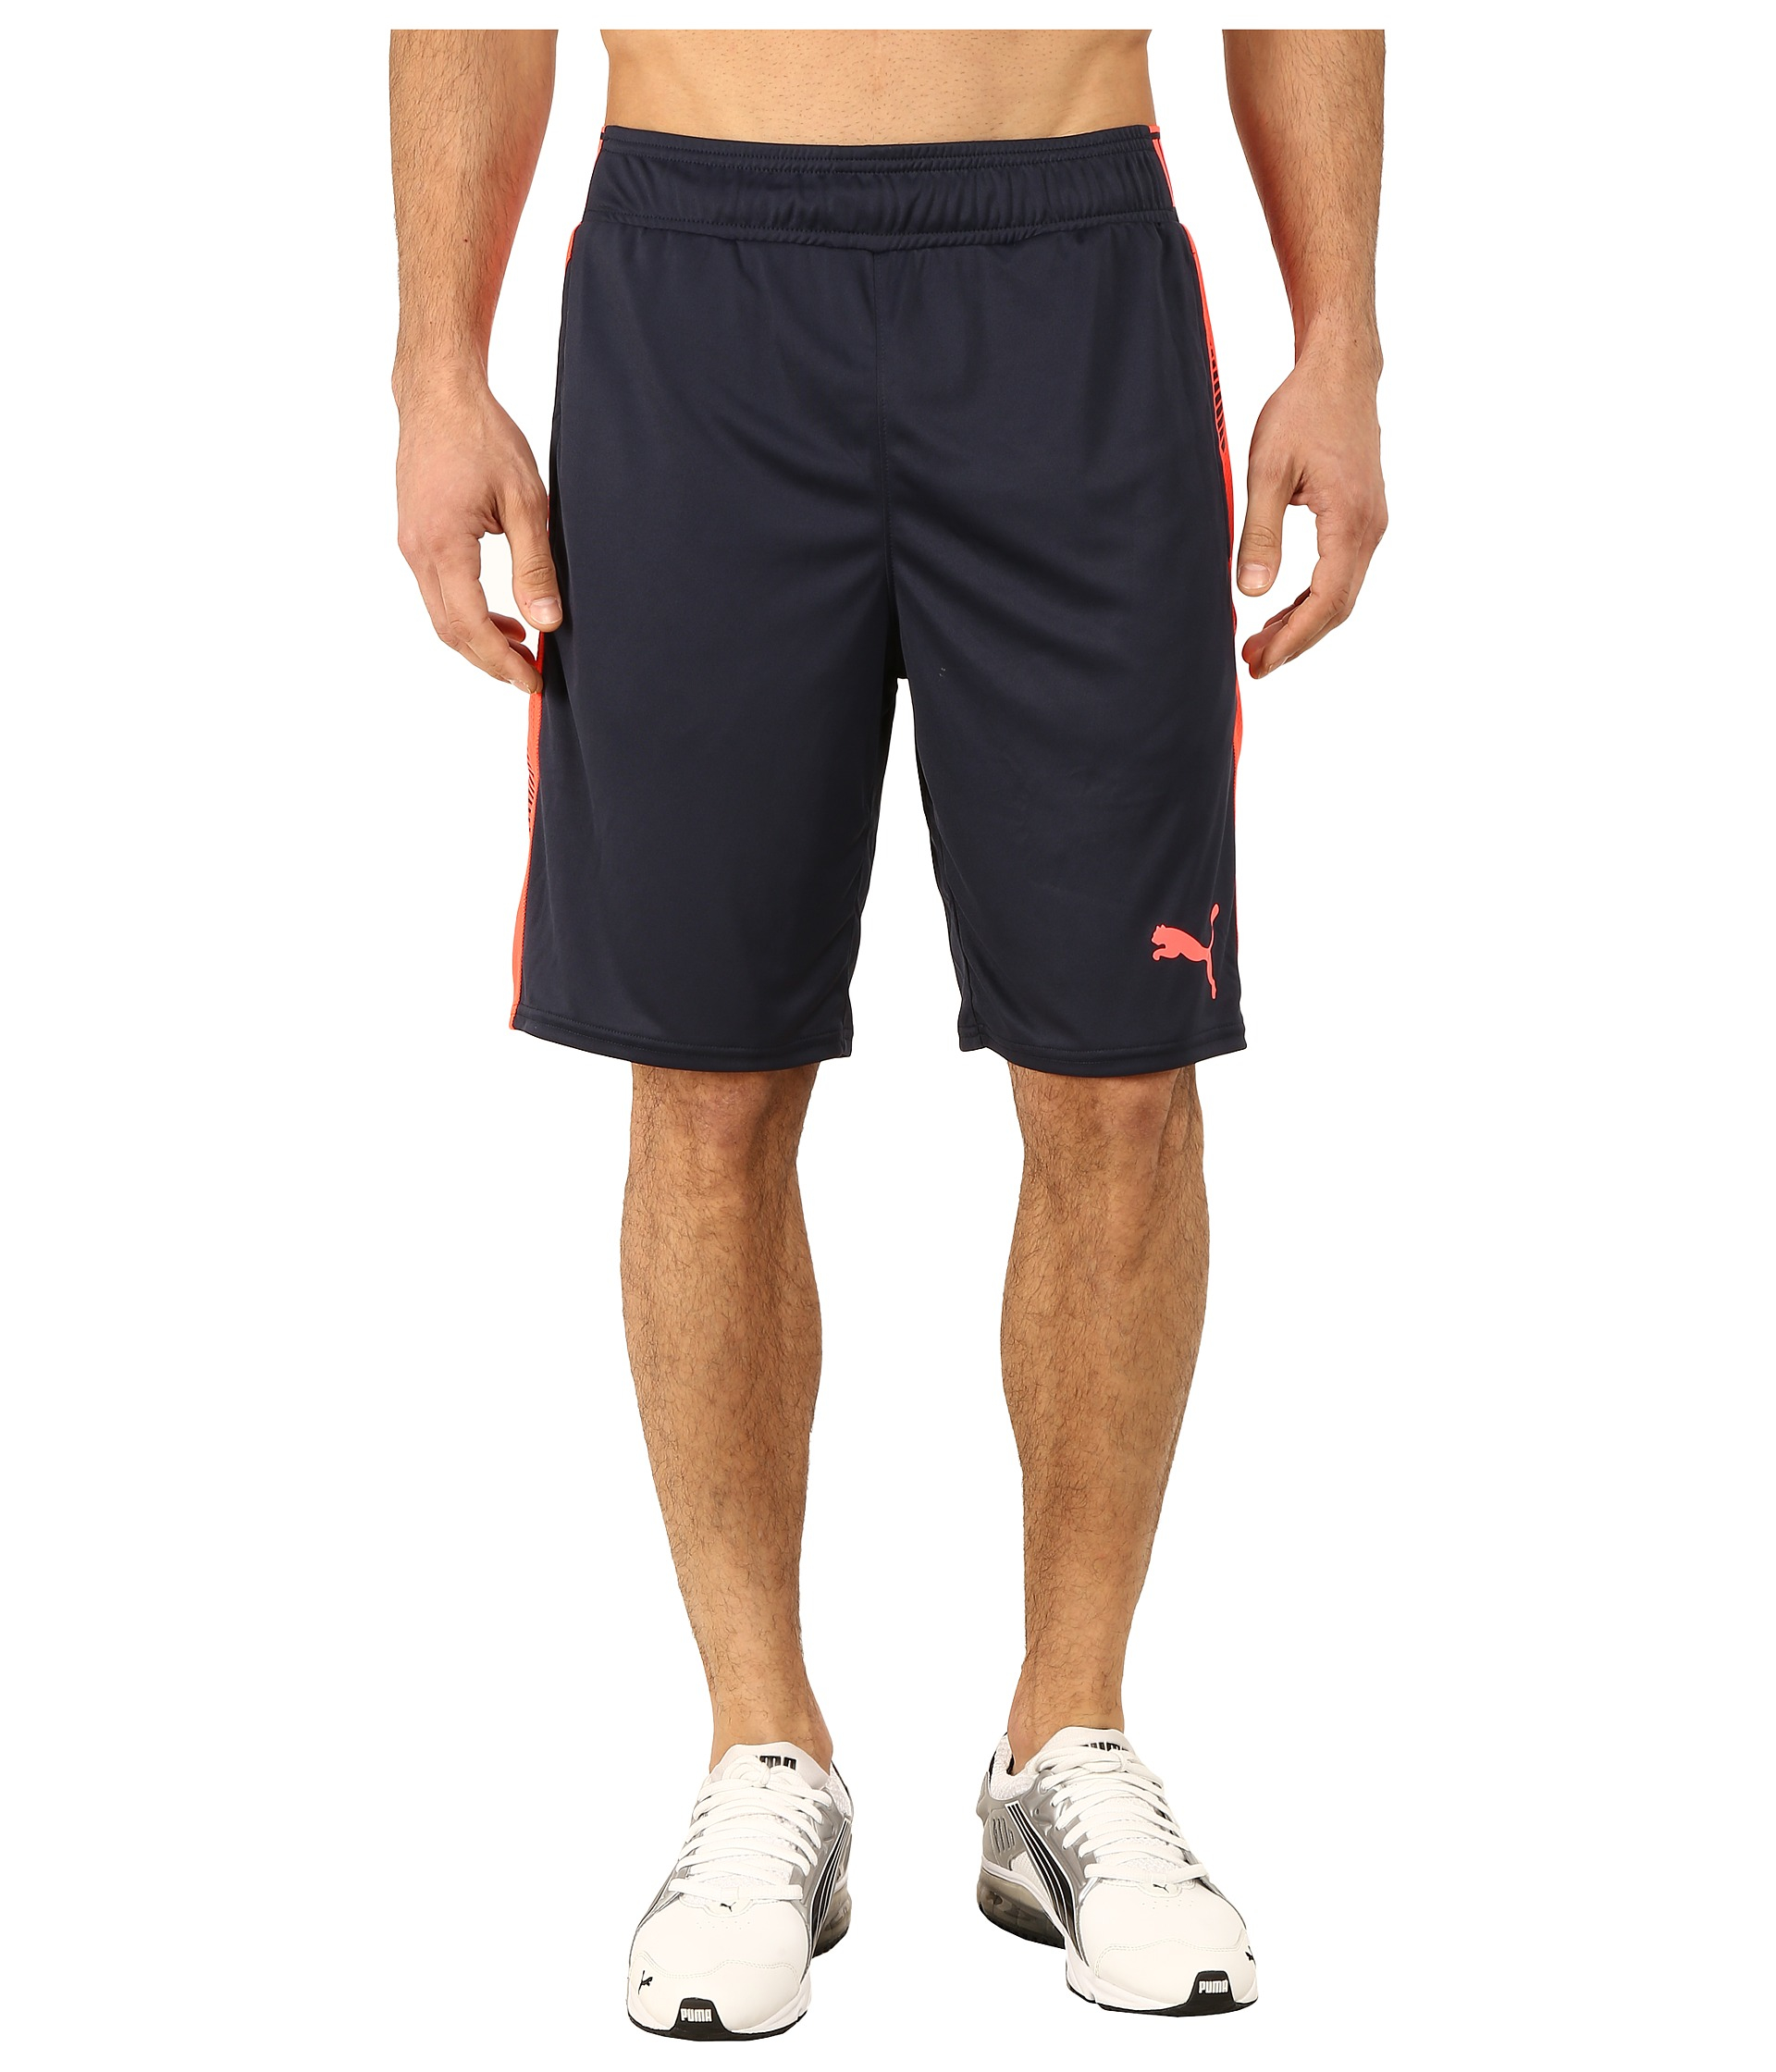 Lyst - Puma Tilted Formstripe Shorts in Blue for Men